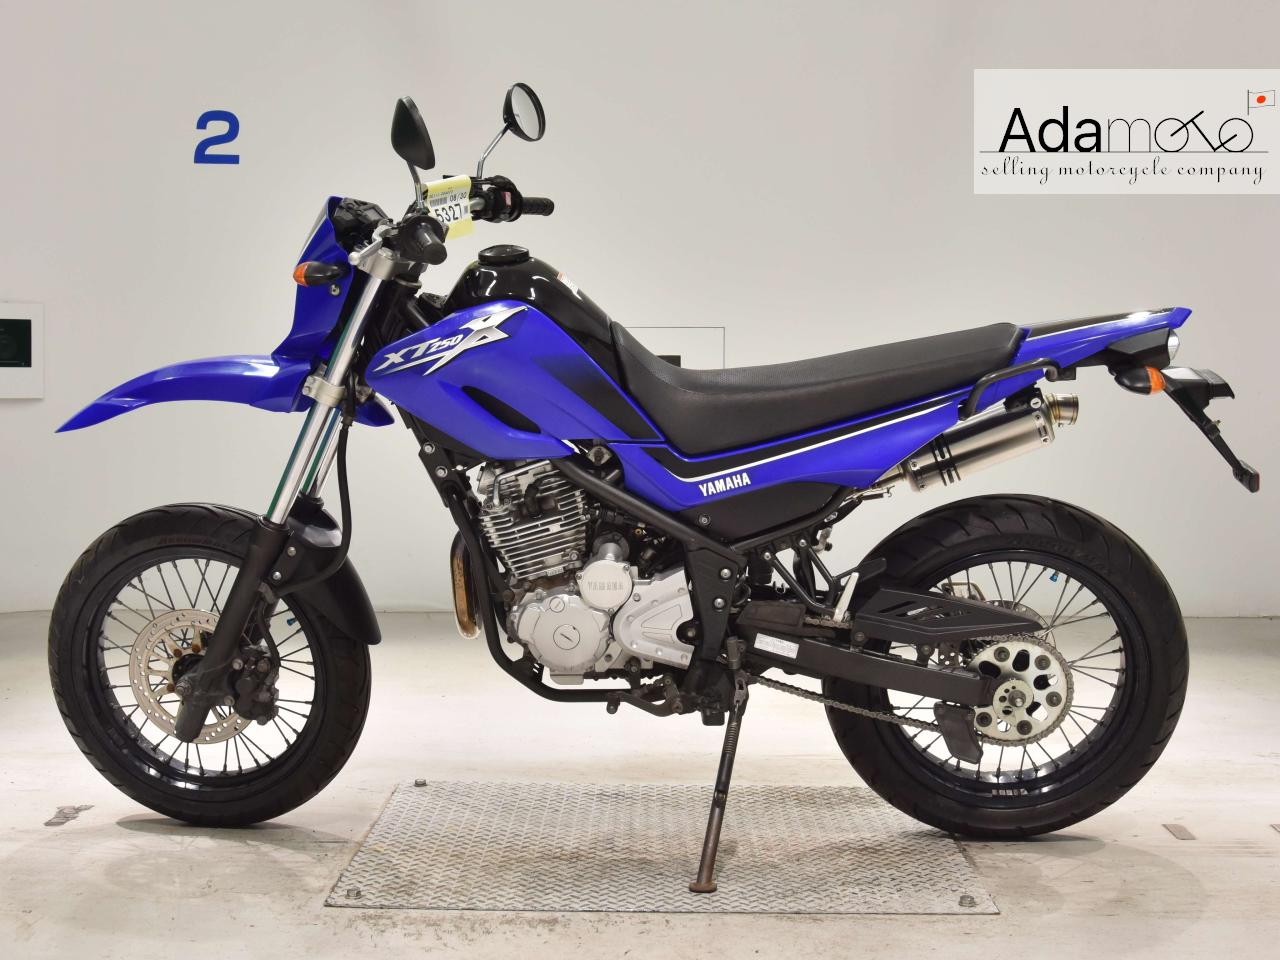 Yamaha XT250X - Adamoto - Motorcycles from Japan